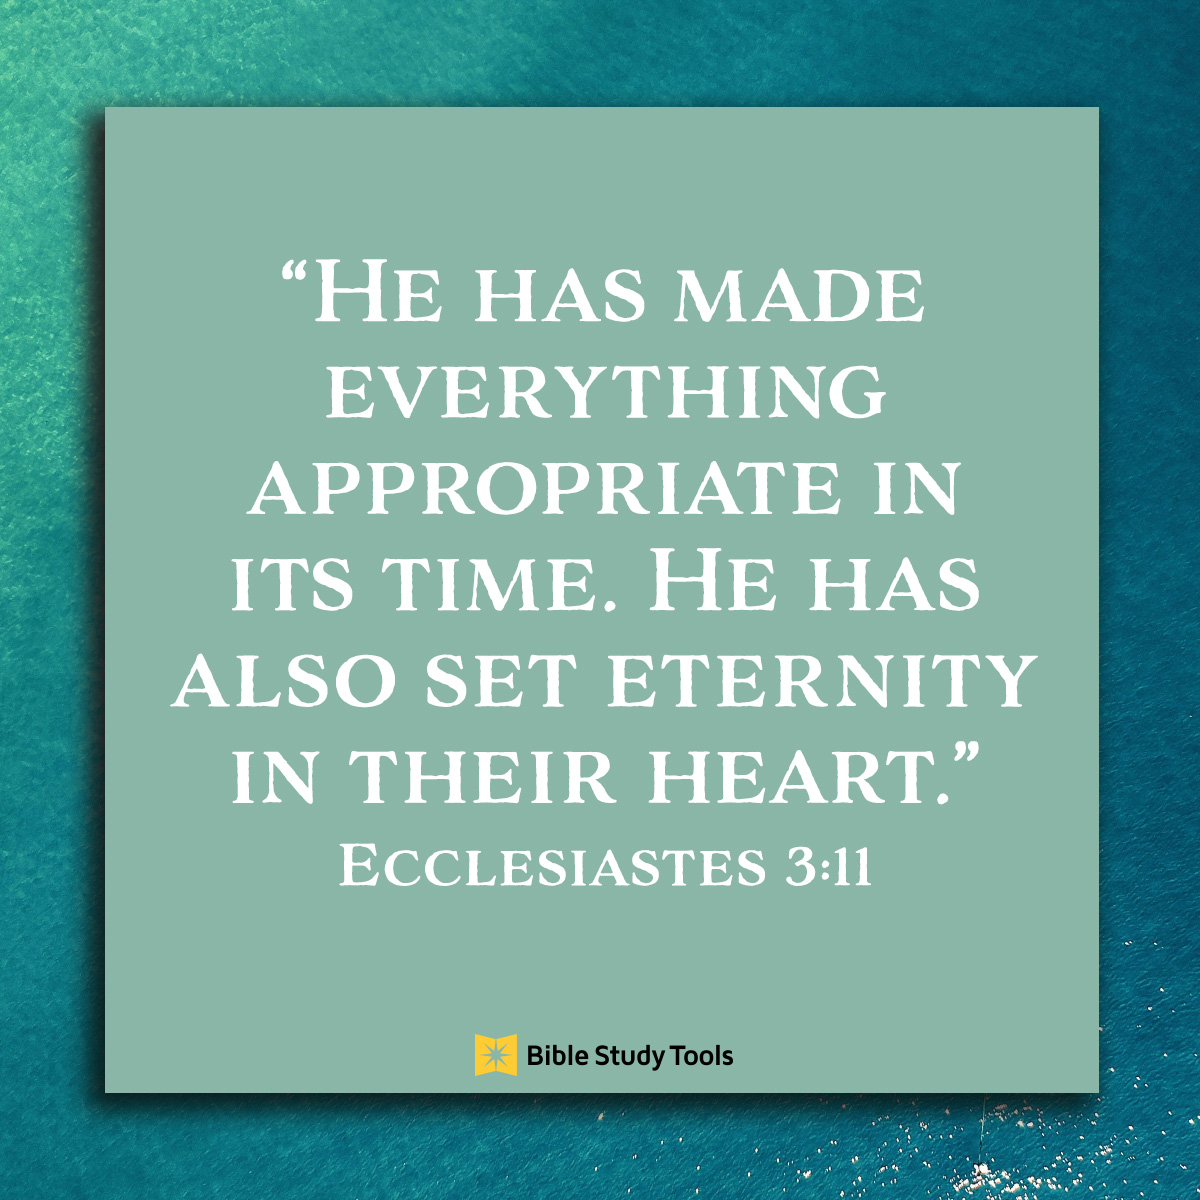 Ecclesiastes 3:11, inspirational image